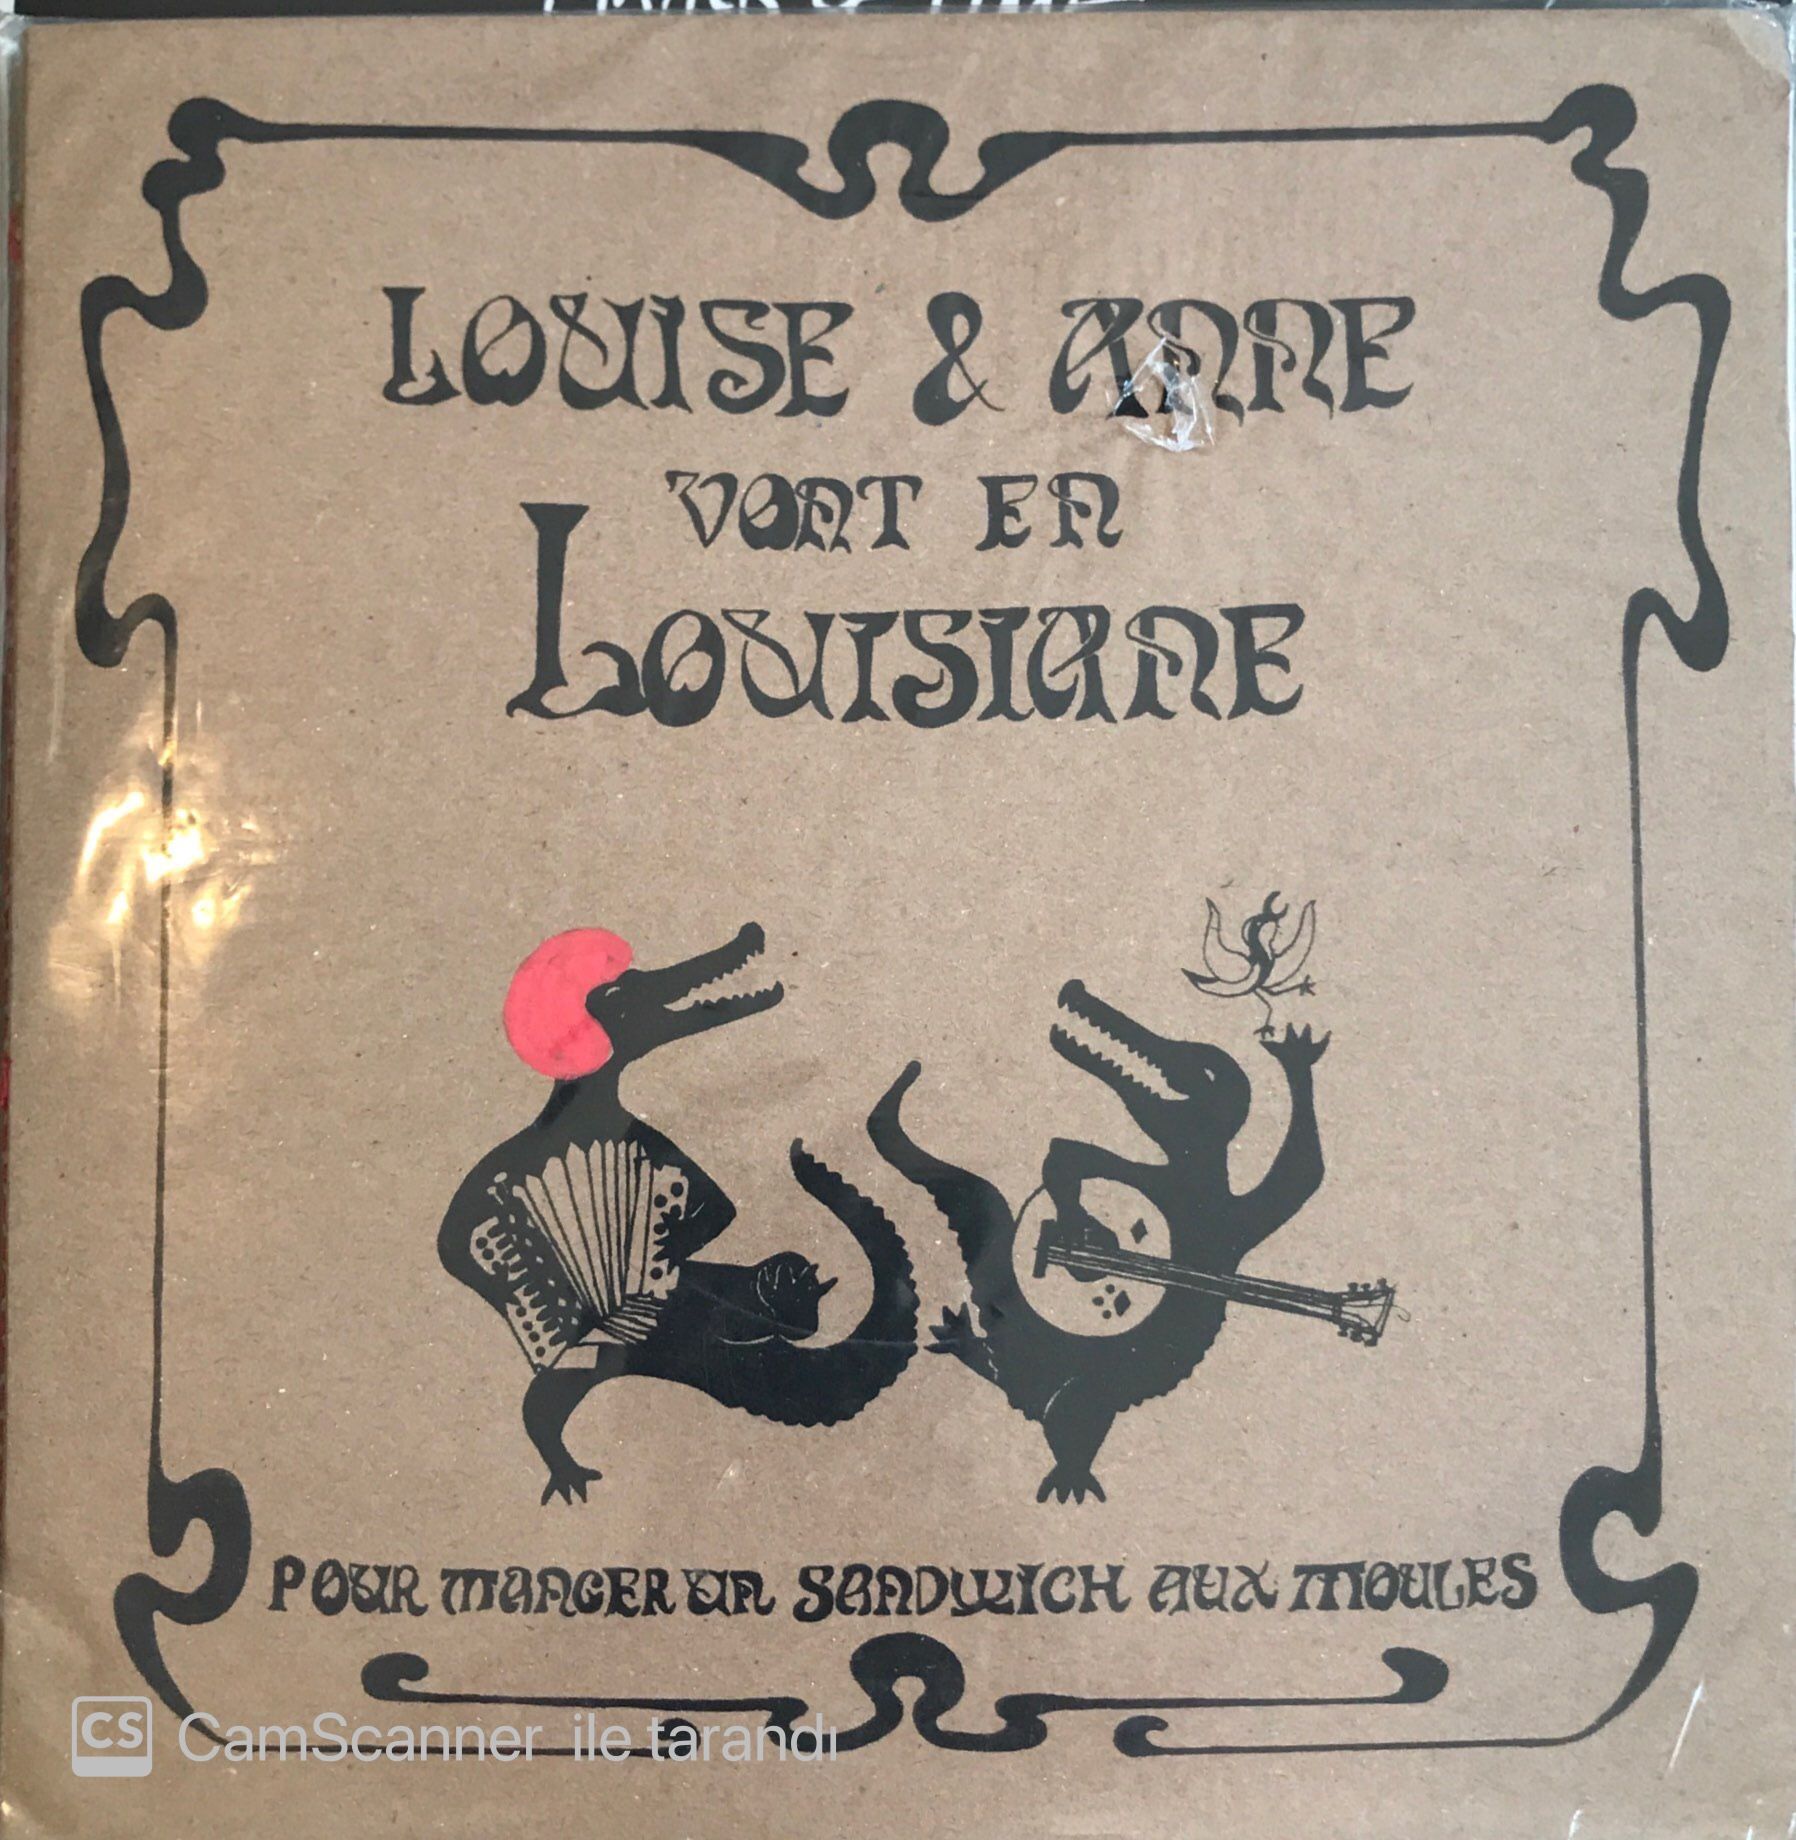 Louise & Anne Vont En Louisiane 45lik